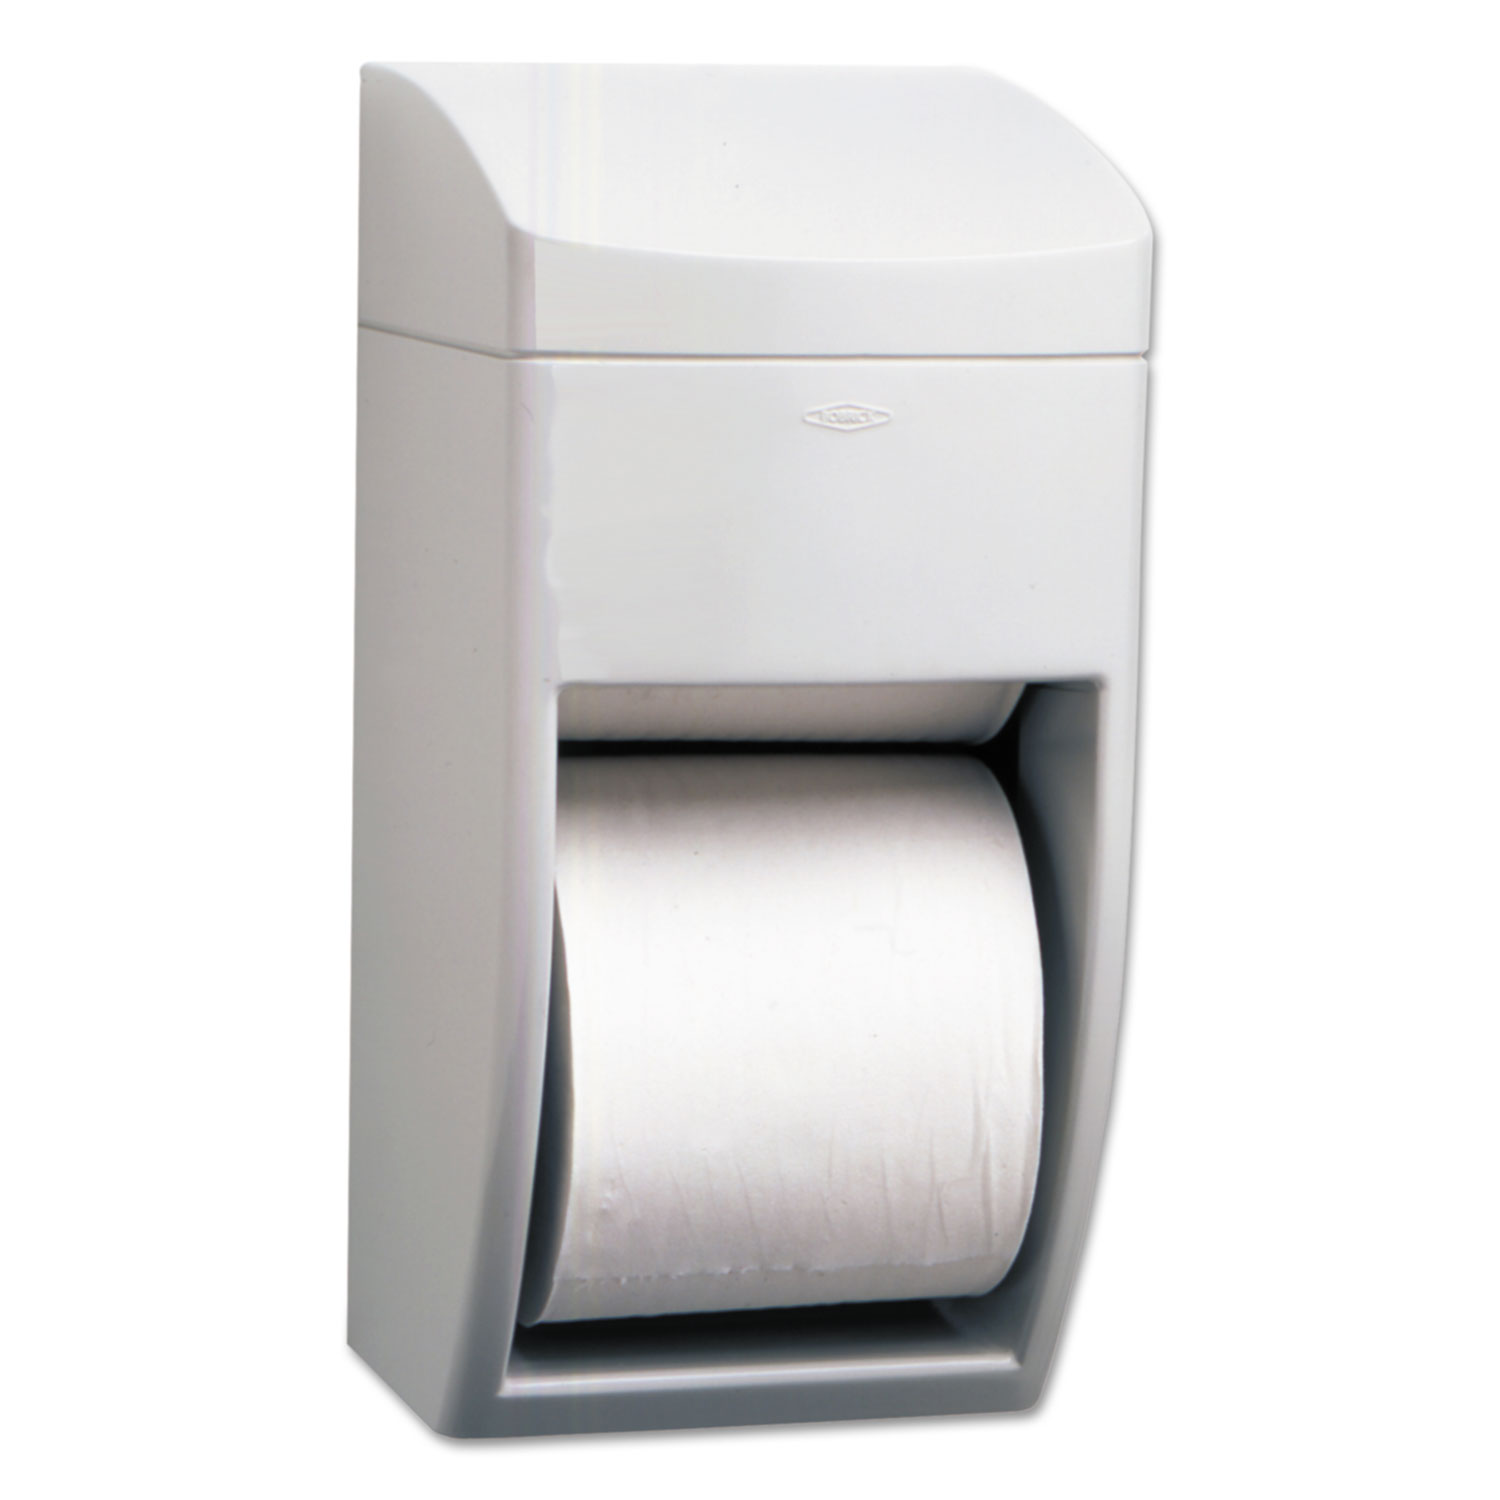  Bobrick BOB 5288 Matrix Series Two-Roll Tissue Dispenser, 6 1/4w x 6 7/8d x 13 1/2h, Gray (BOB5288) 